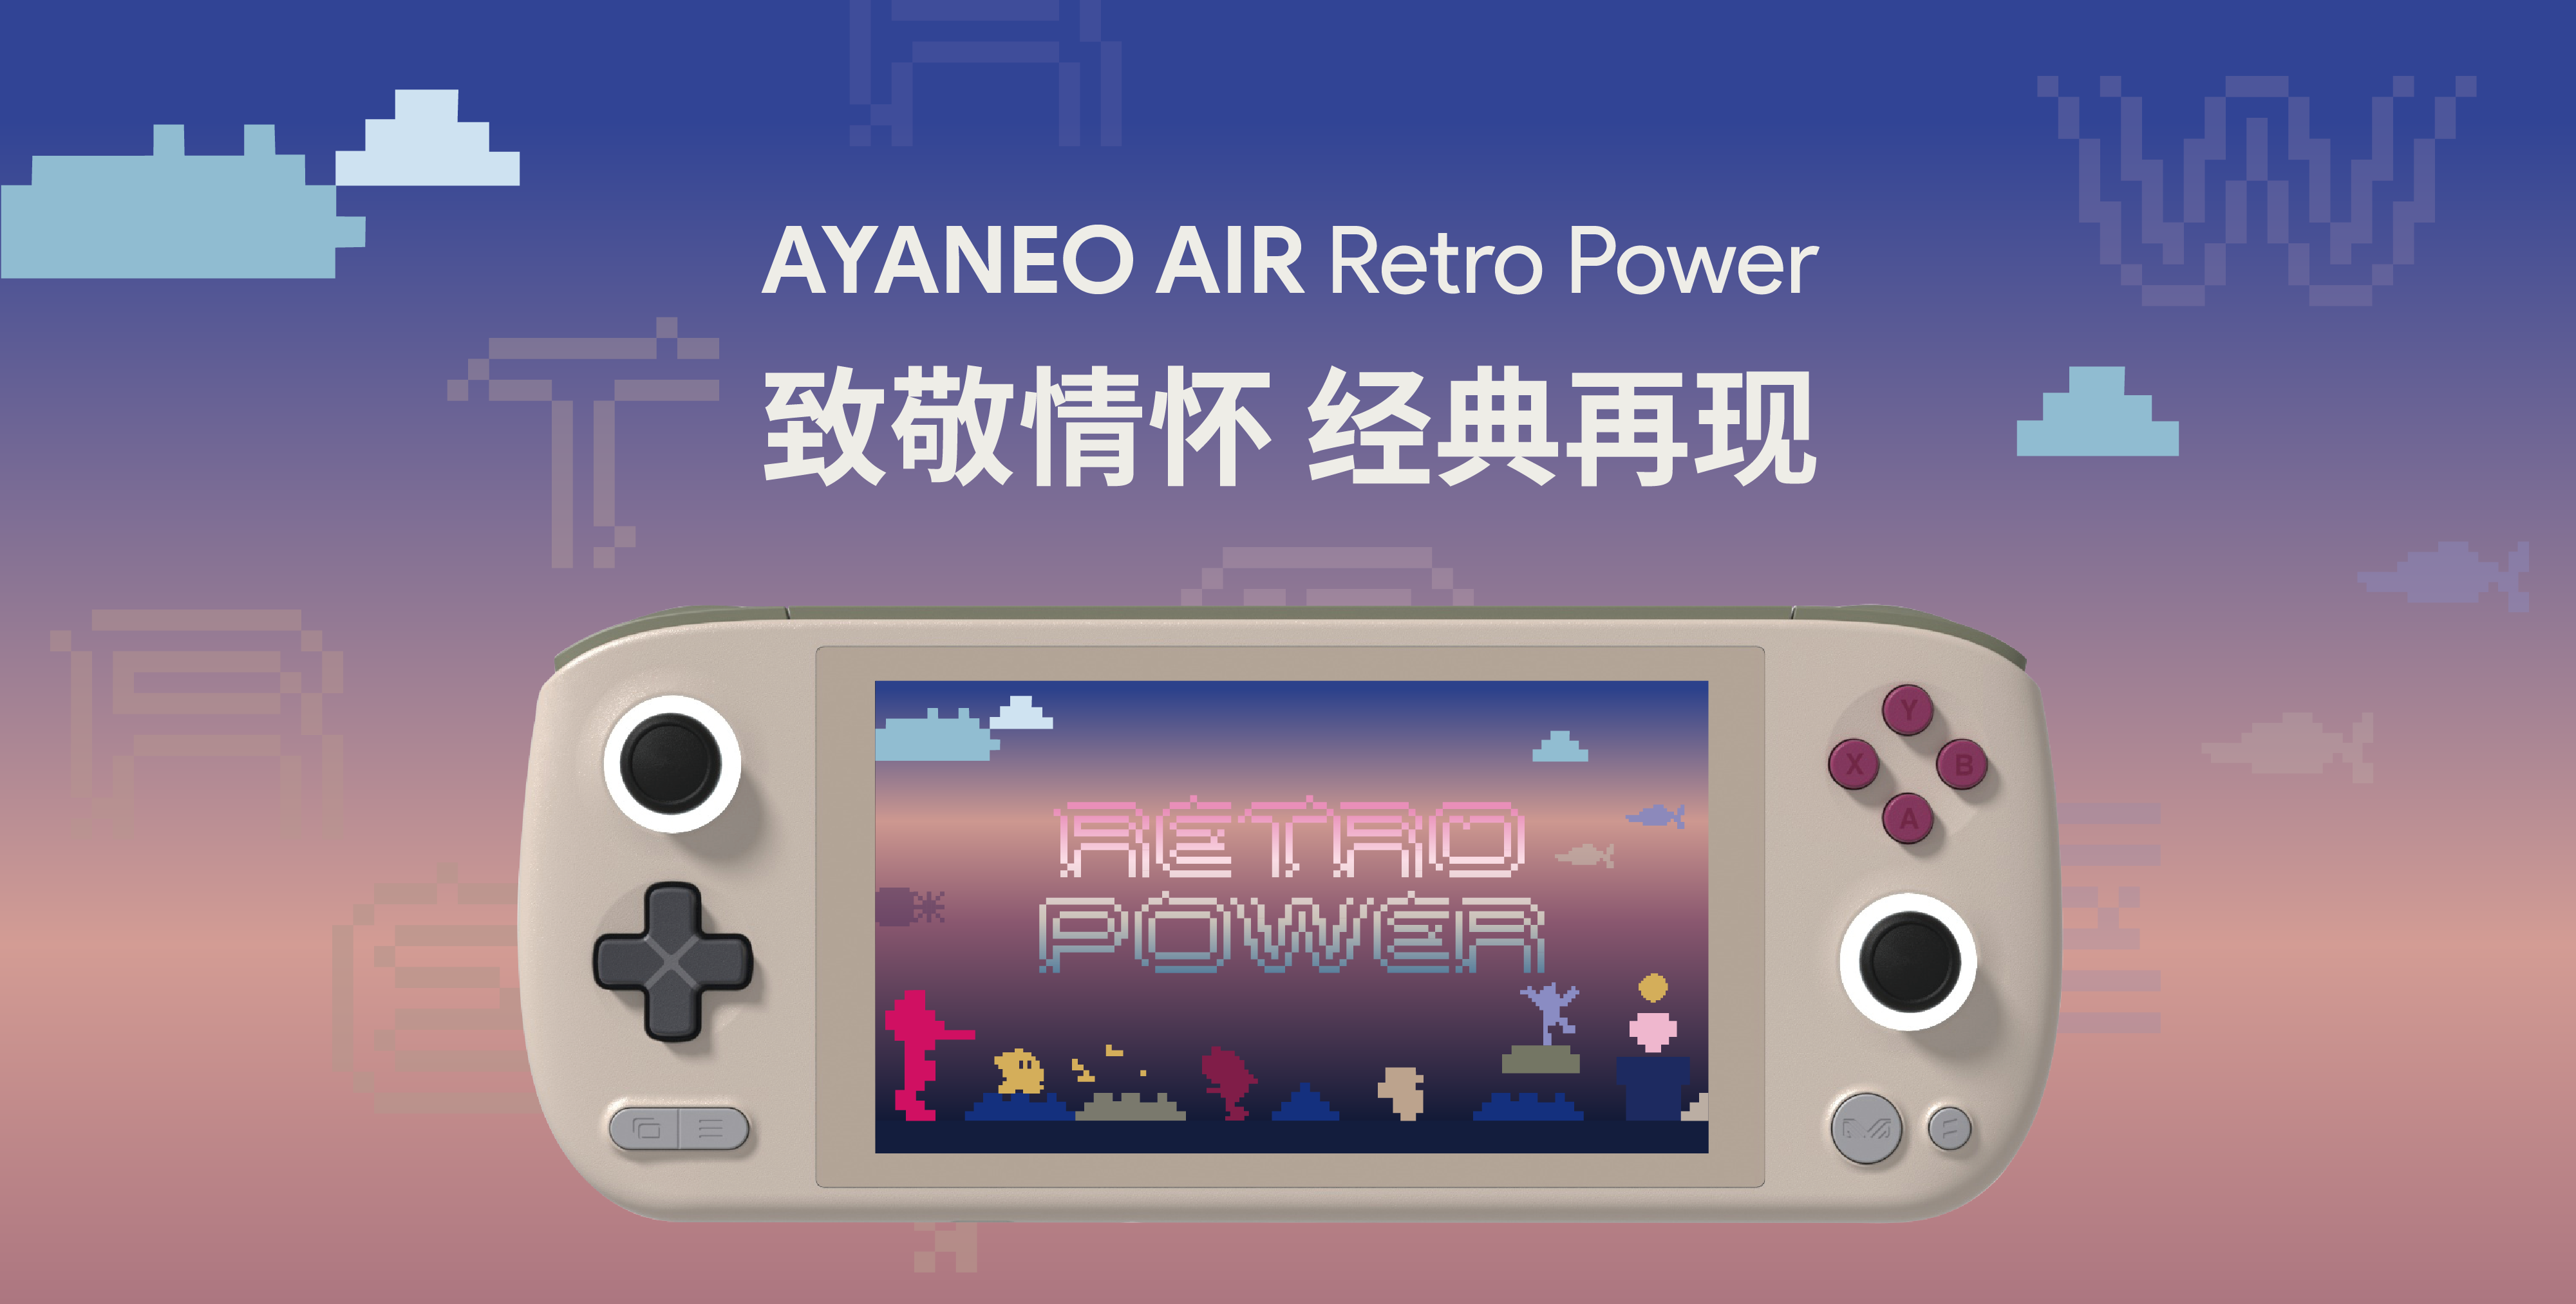 AYANEO AIR Retro Power - AYANEO